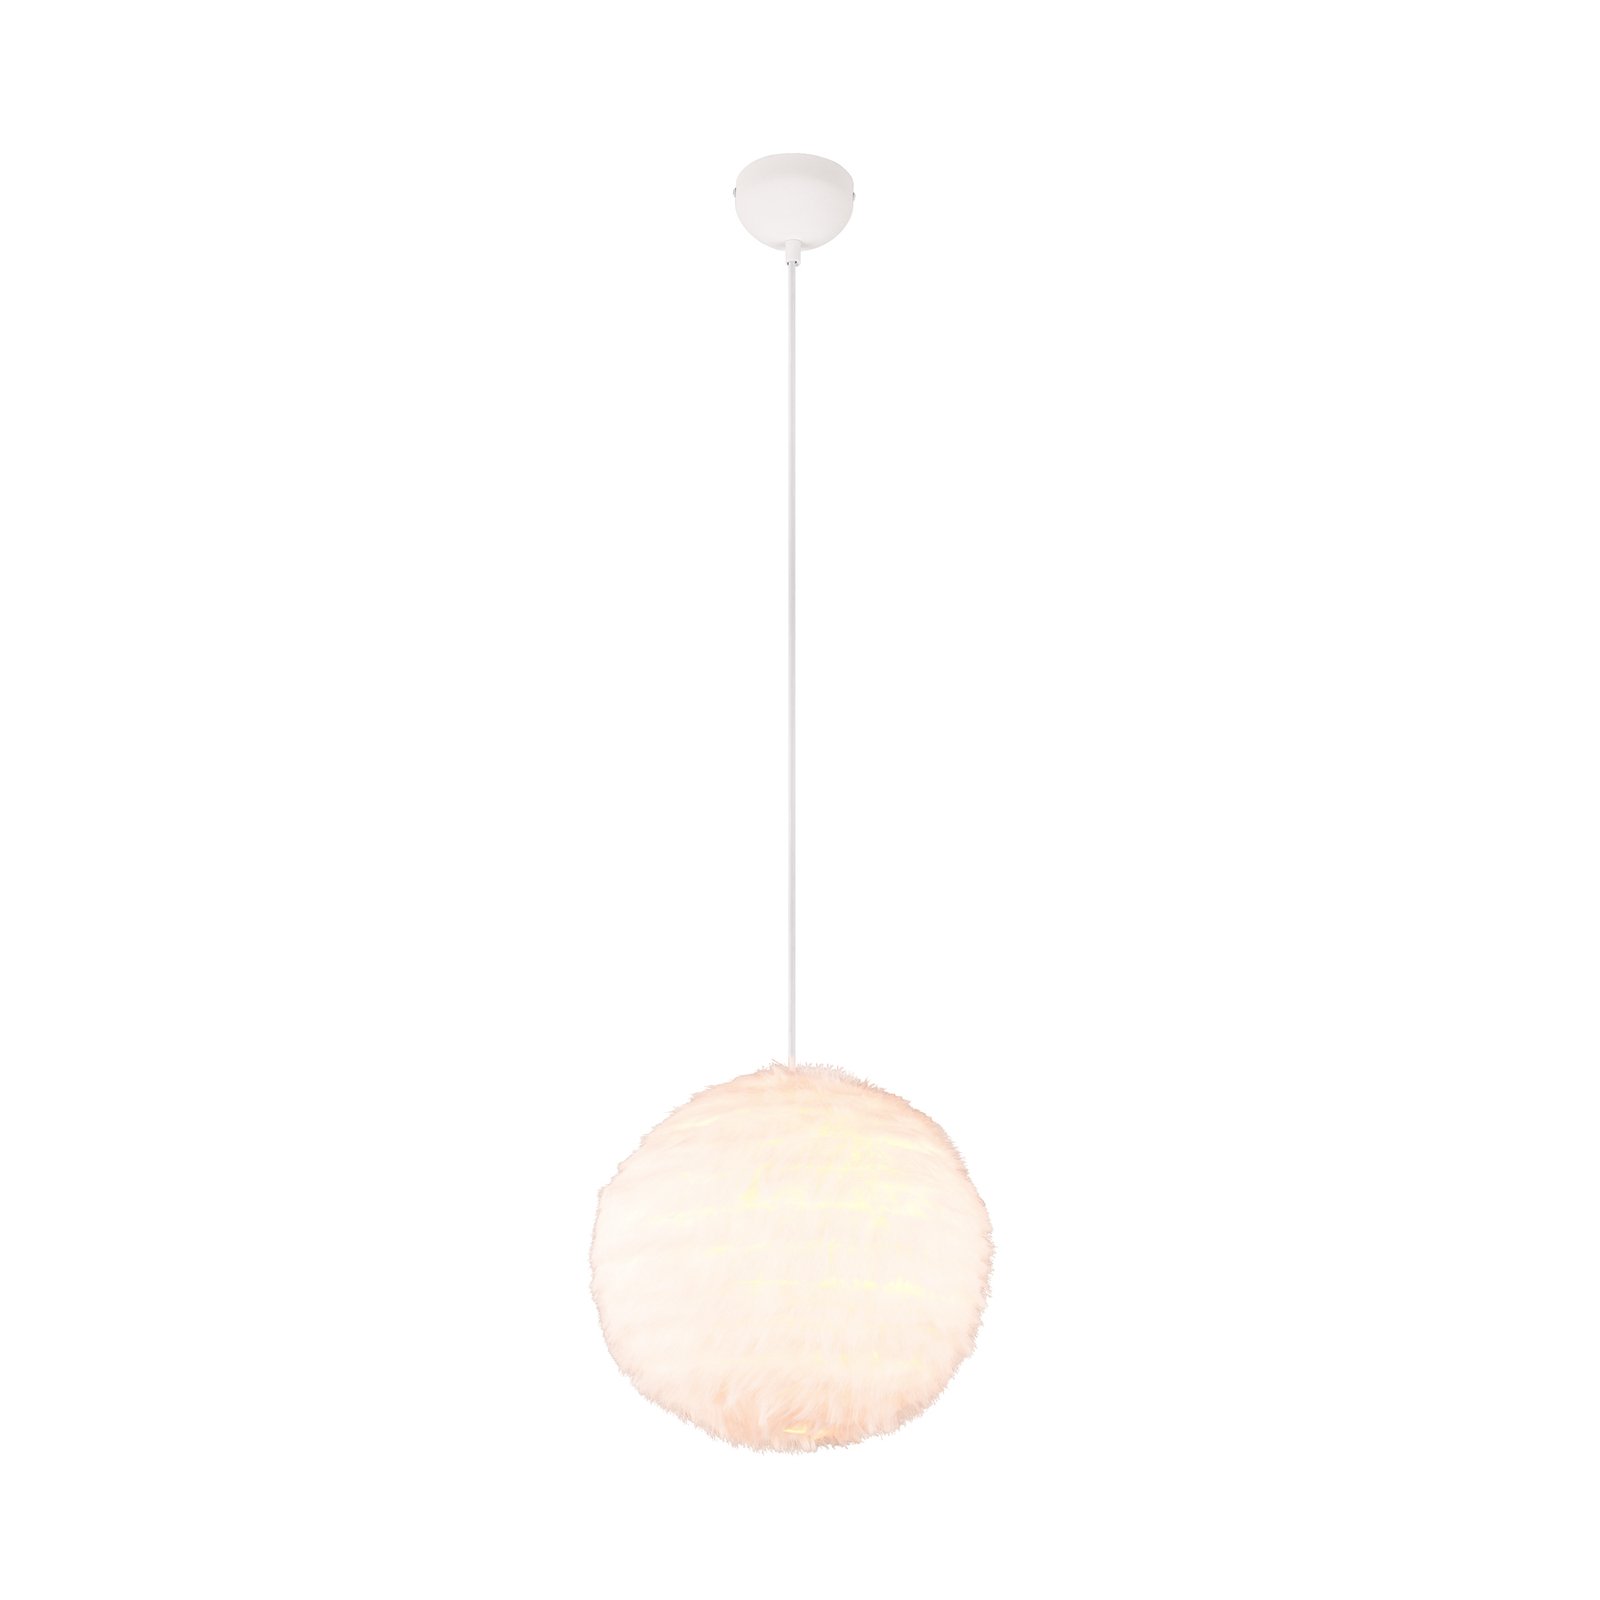 Harige hanglamp, Ø 35 cm, zandkleurig, synthetisch pluche